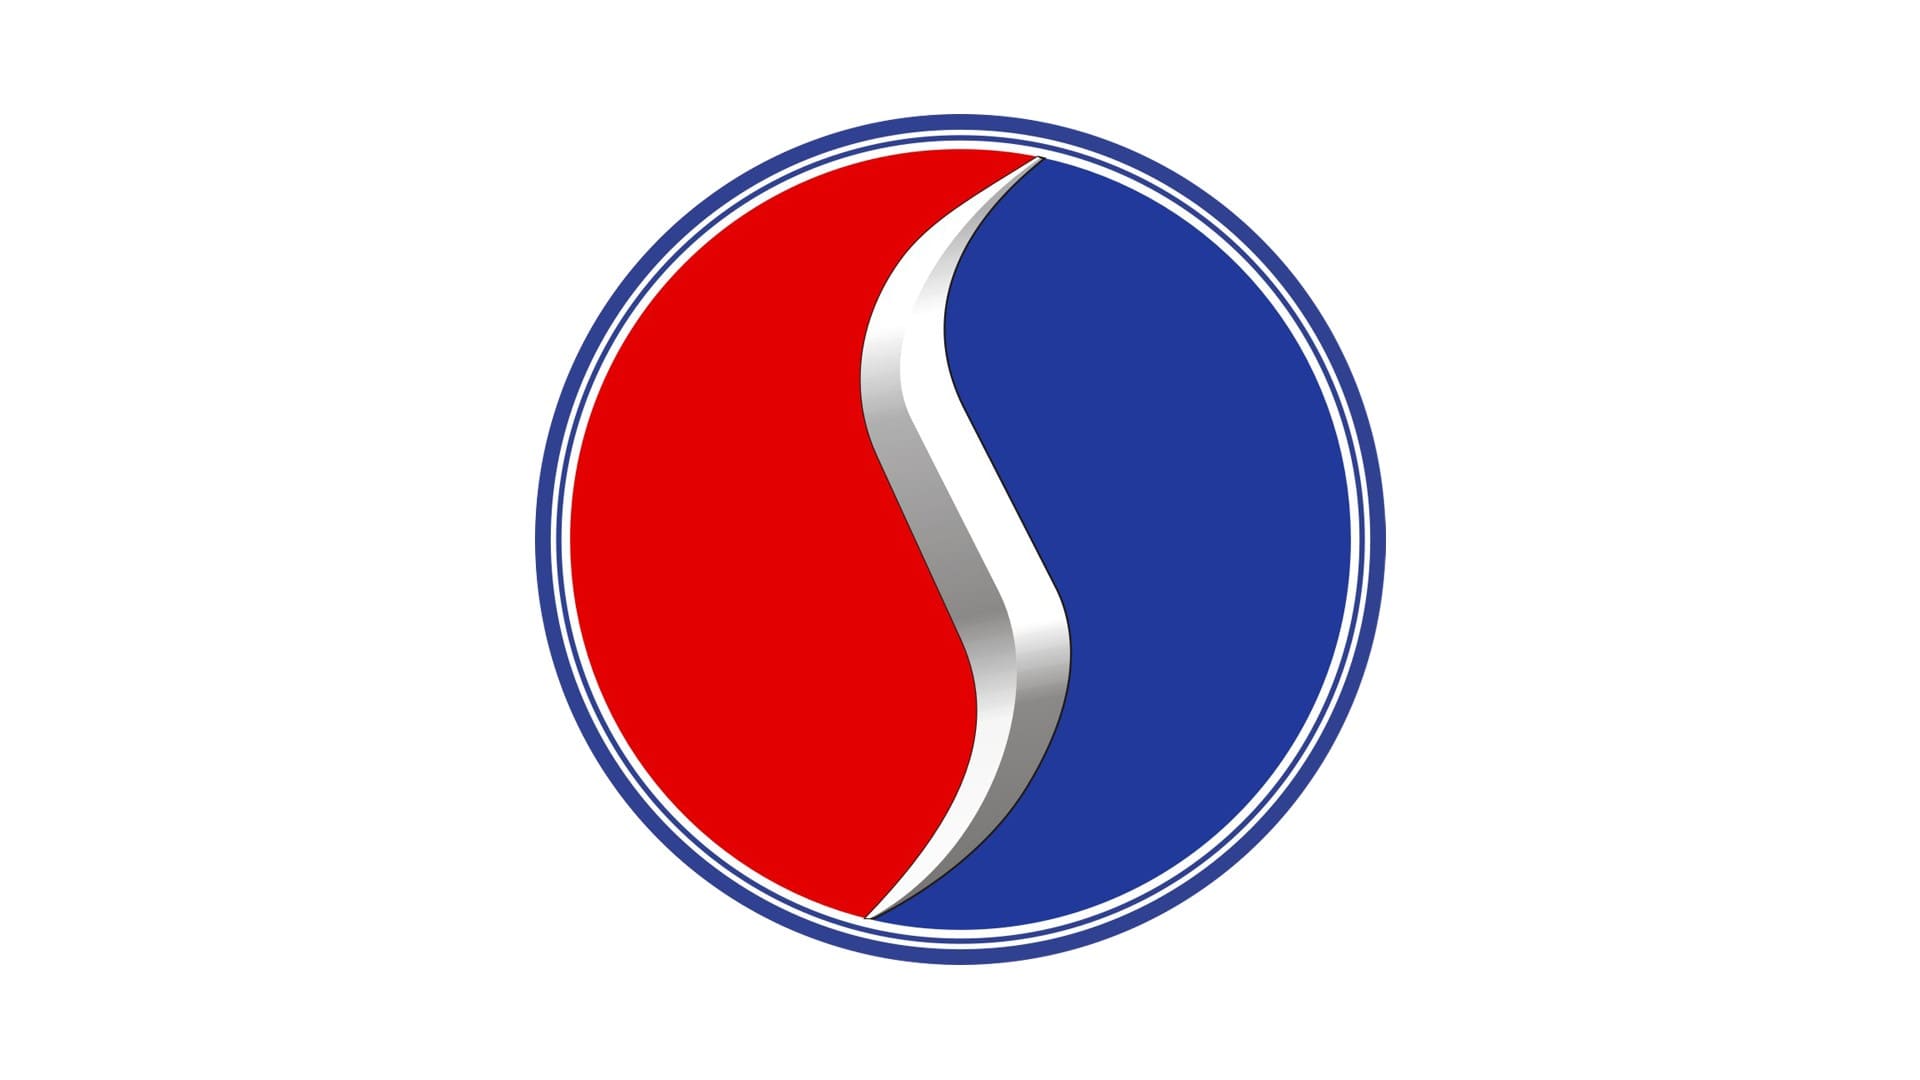 Studebaker logo image